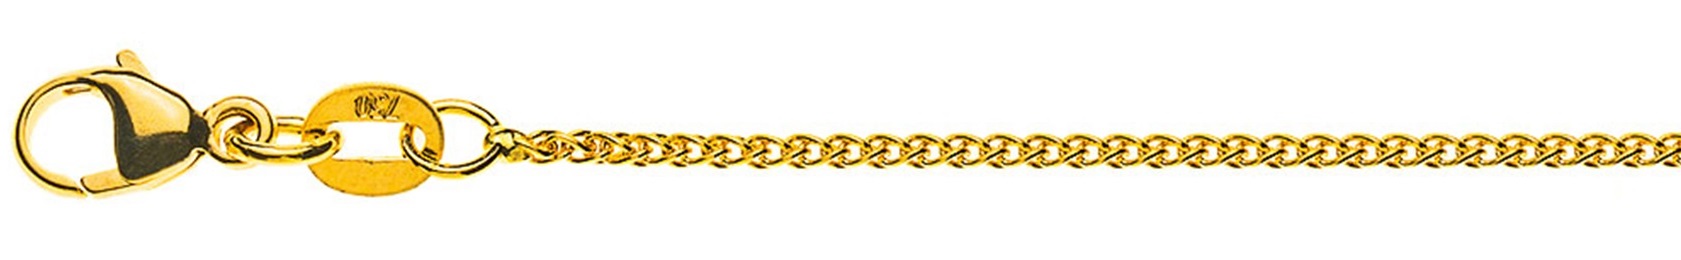 AURONOS Prestige Necklace yellow gold 18K cable chain 45cm 1.2mm